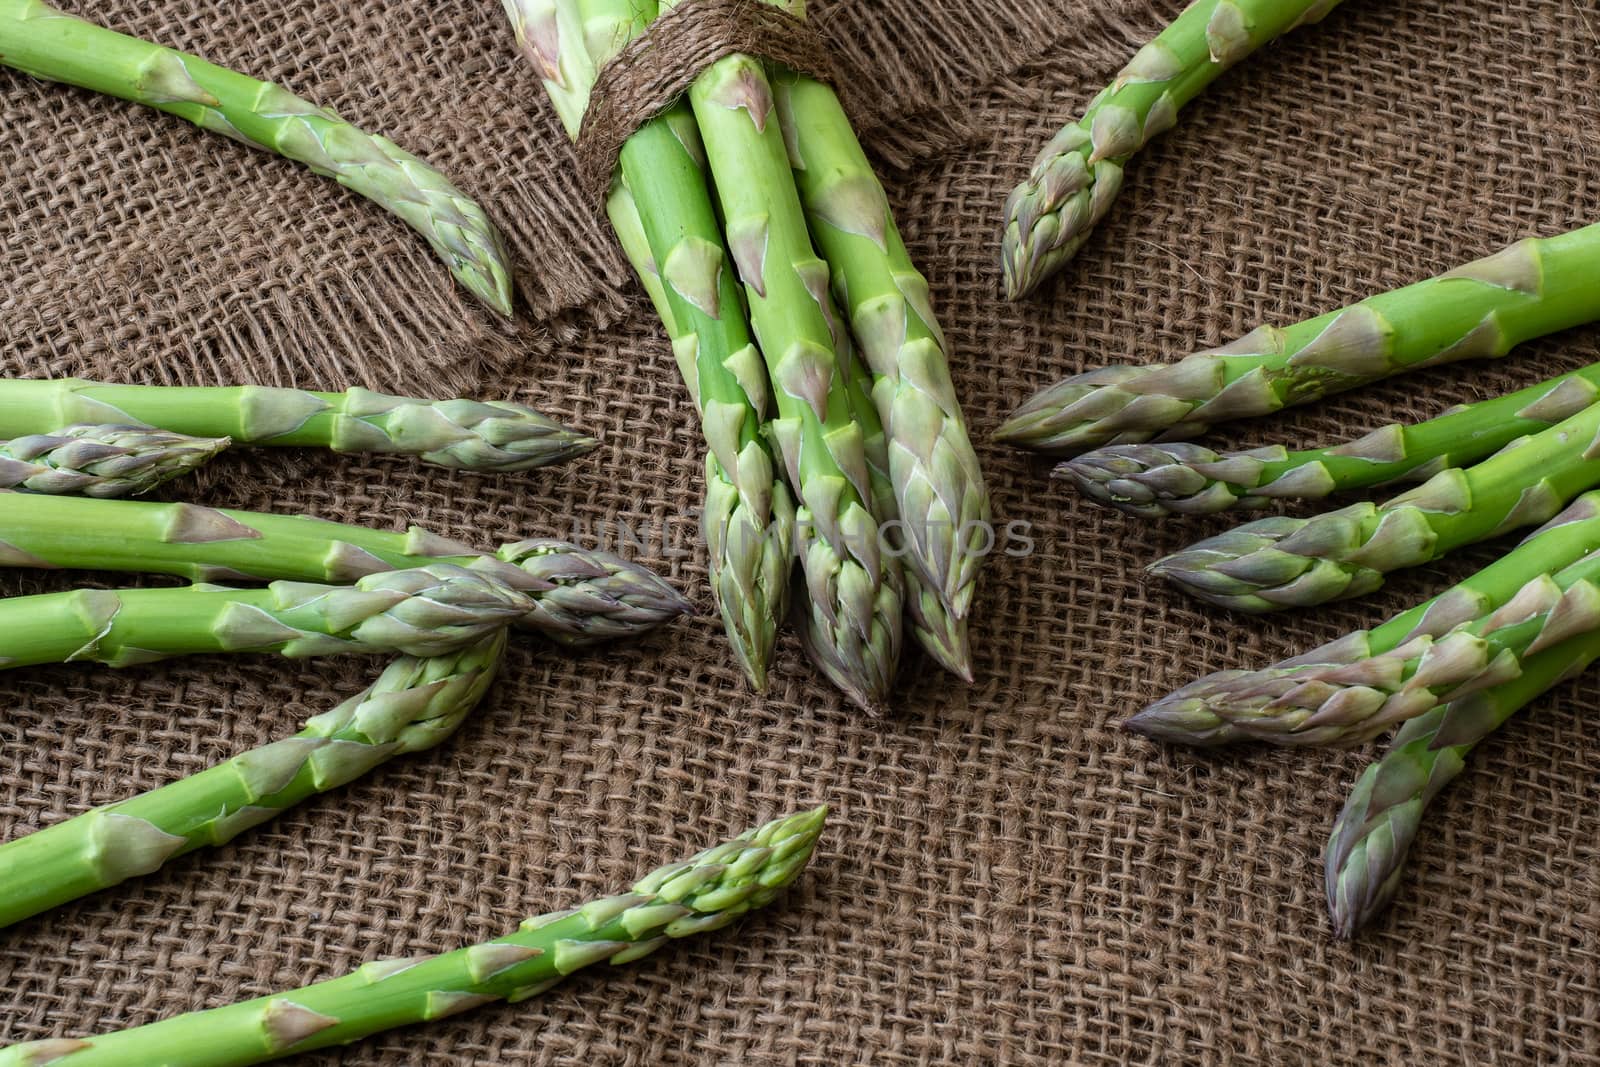 Raw garden asparagus stems. Fresh green spring vegetables on woo by xtrekx